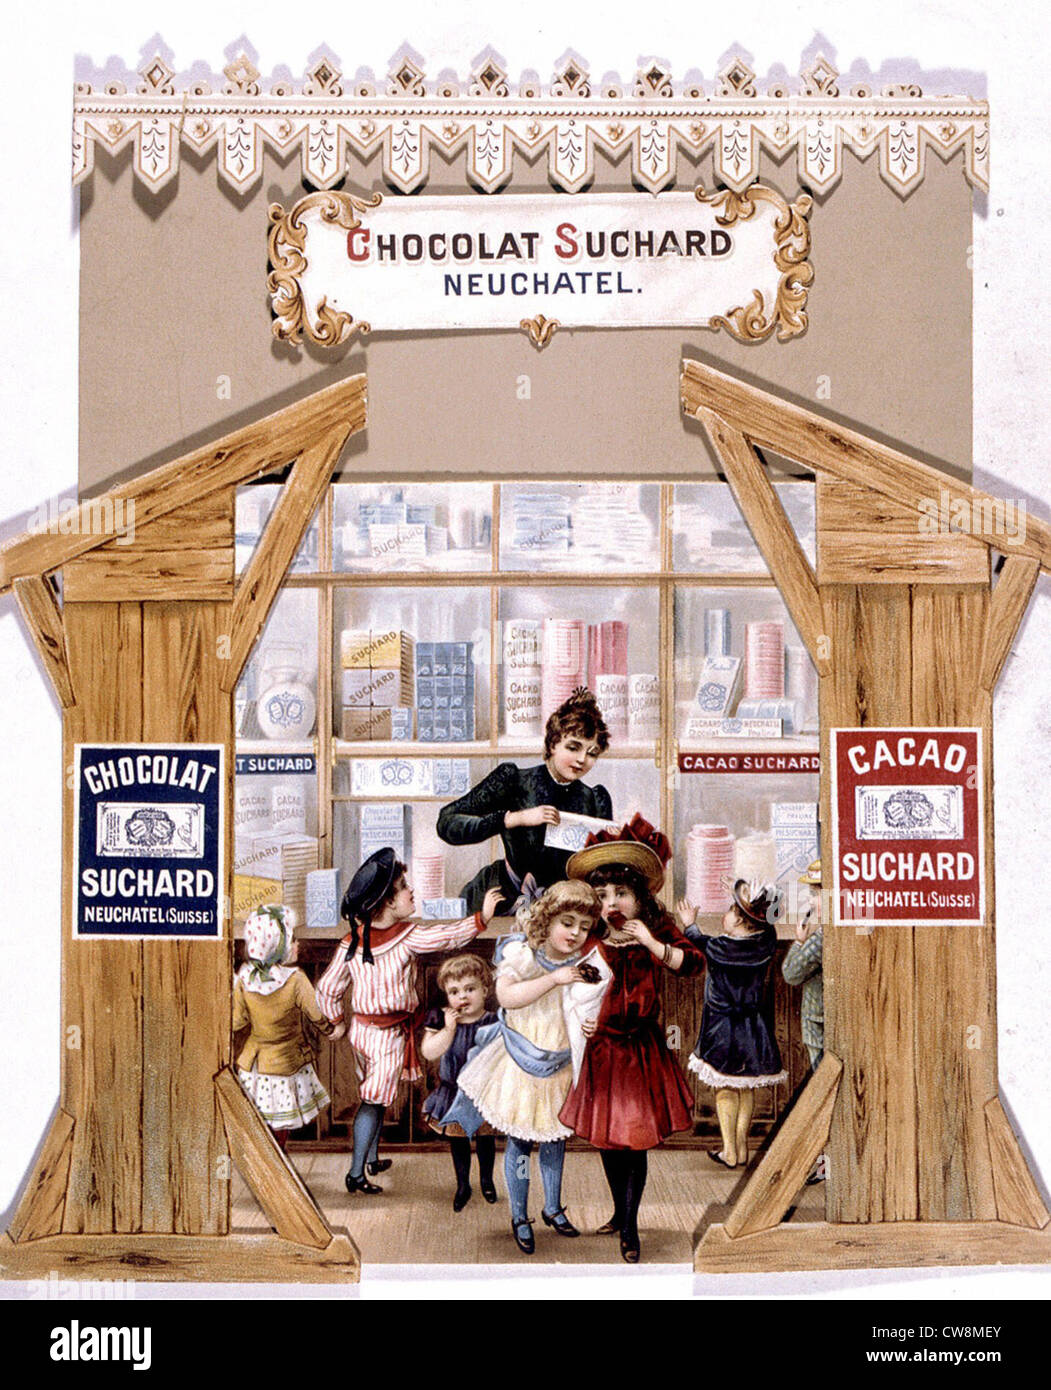 Chocolate Suchard ANUNCIO del siglo XIX. Foto de stock